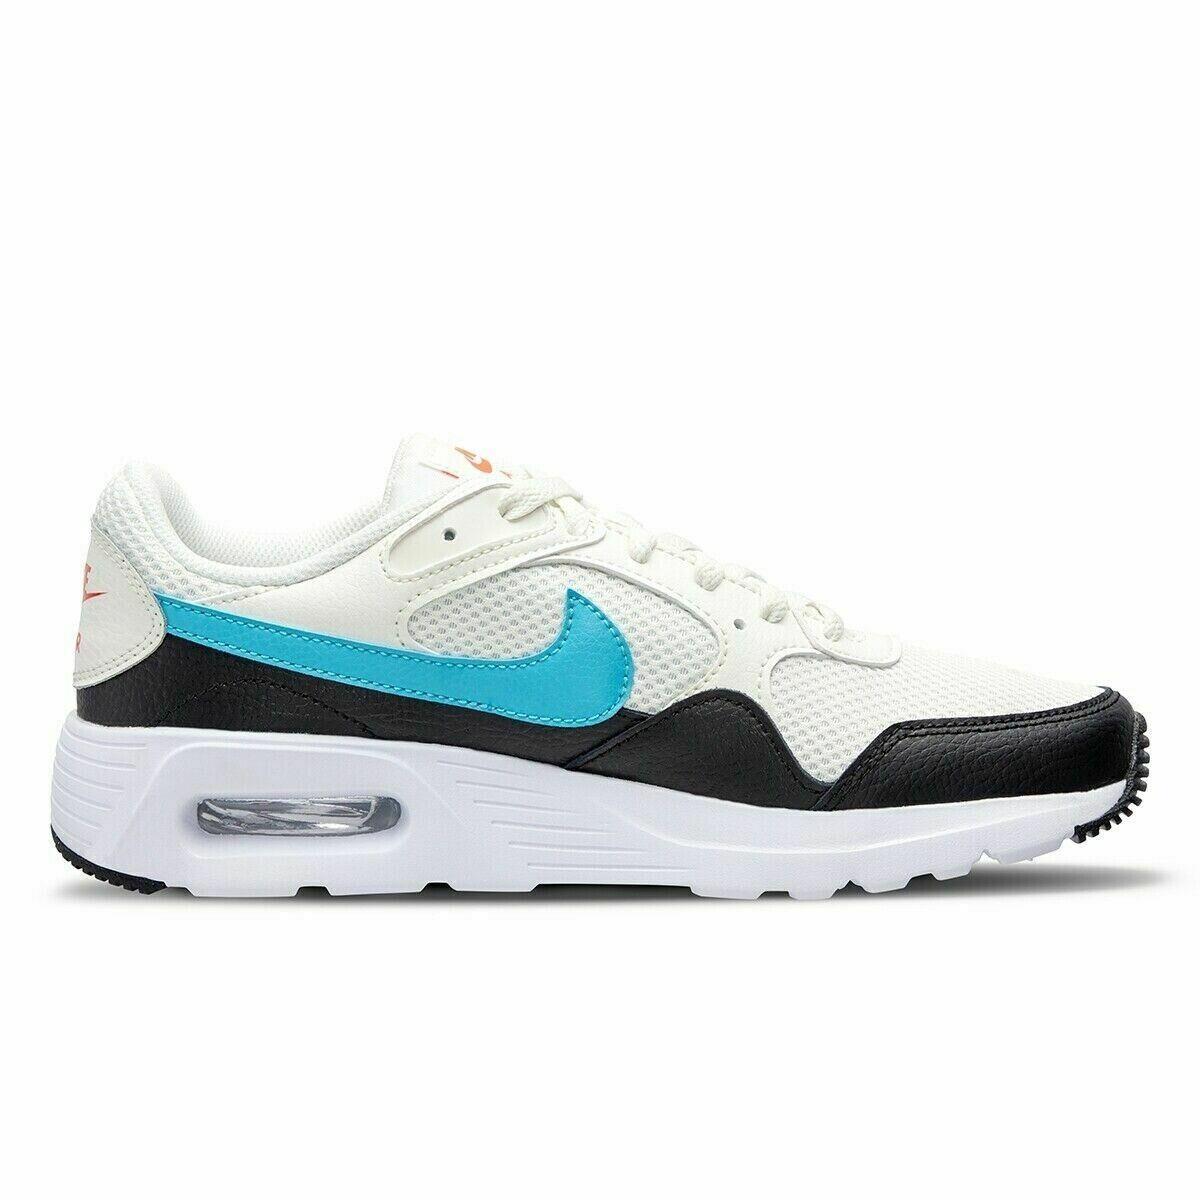 Nike Air Max SC Womens Size 11 Shoes CW4554 104 White Blue Black - Multicolor